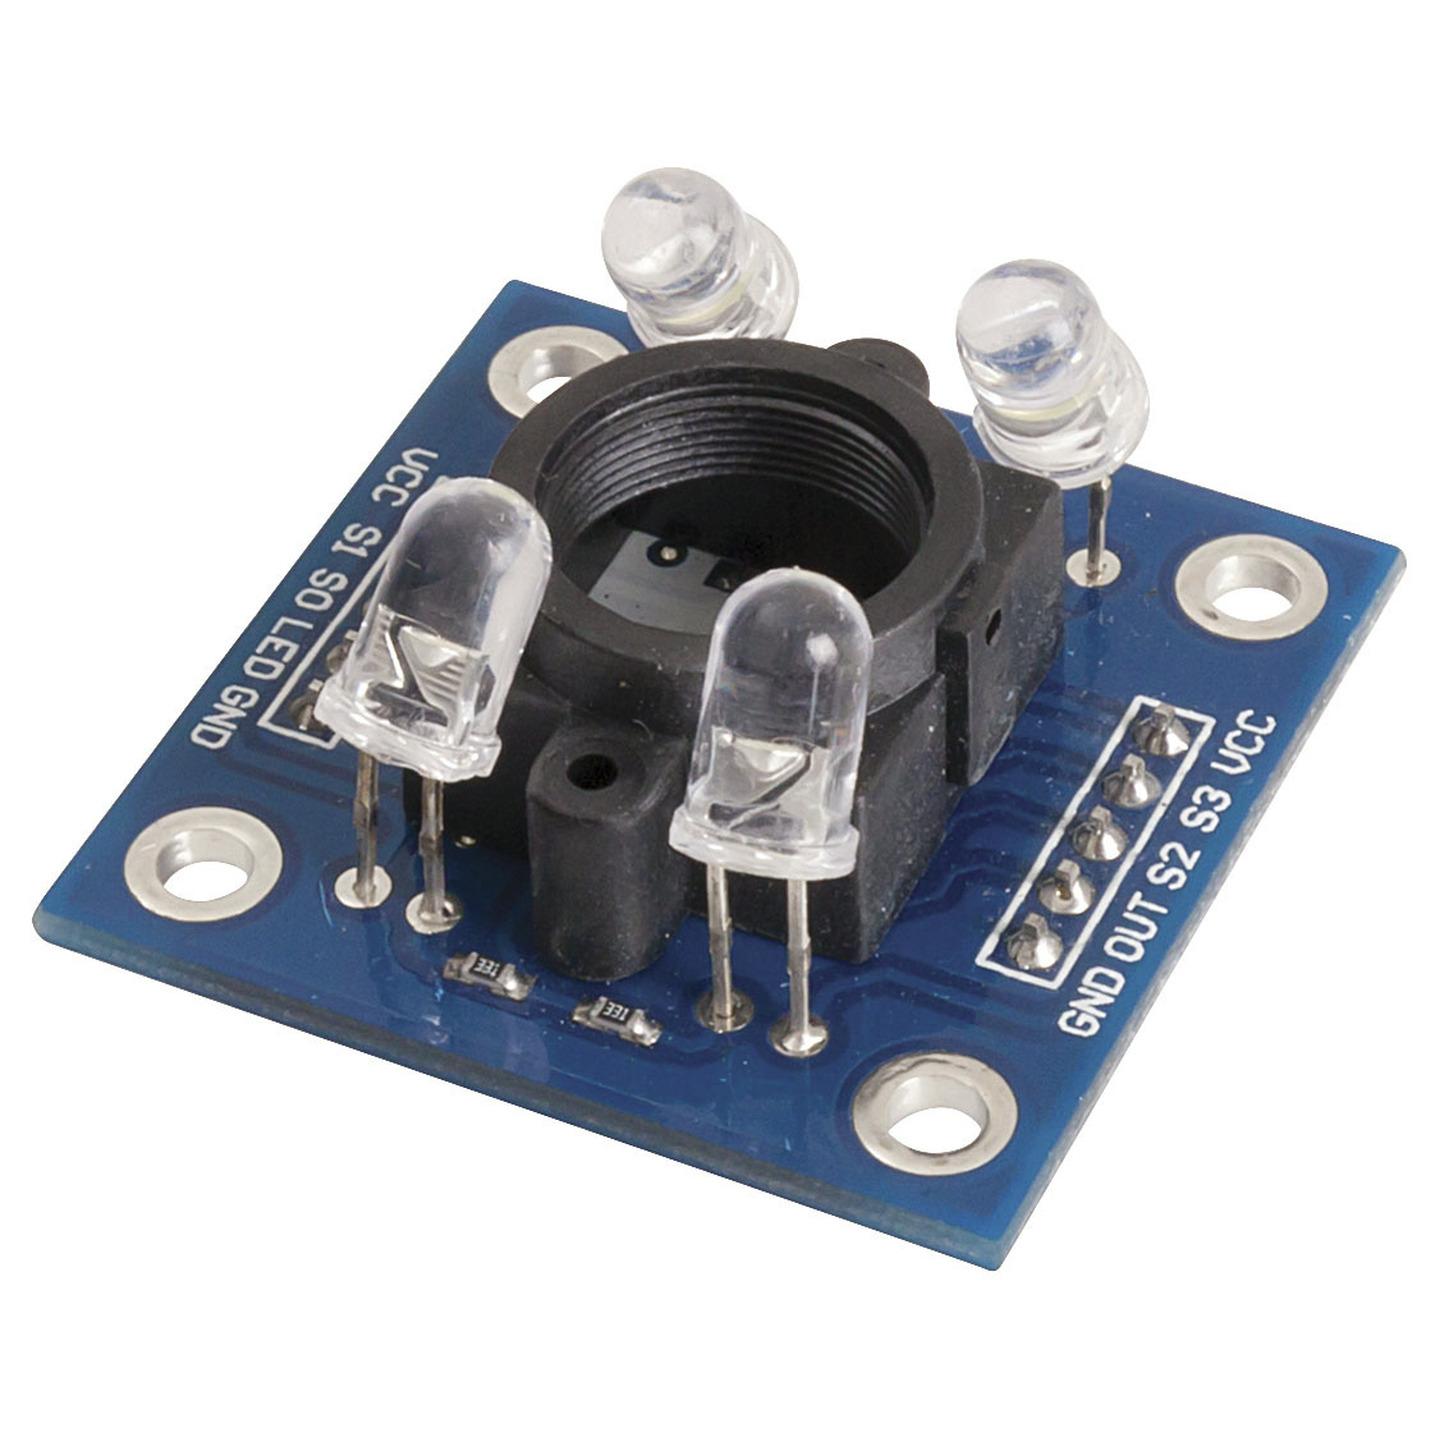 Arduino Compatible Colour Sensor Module